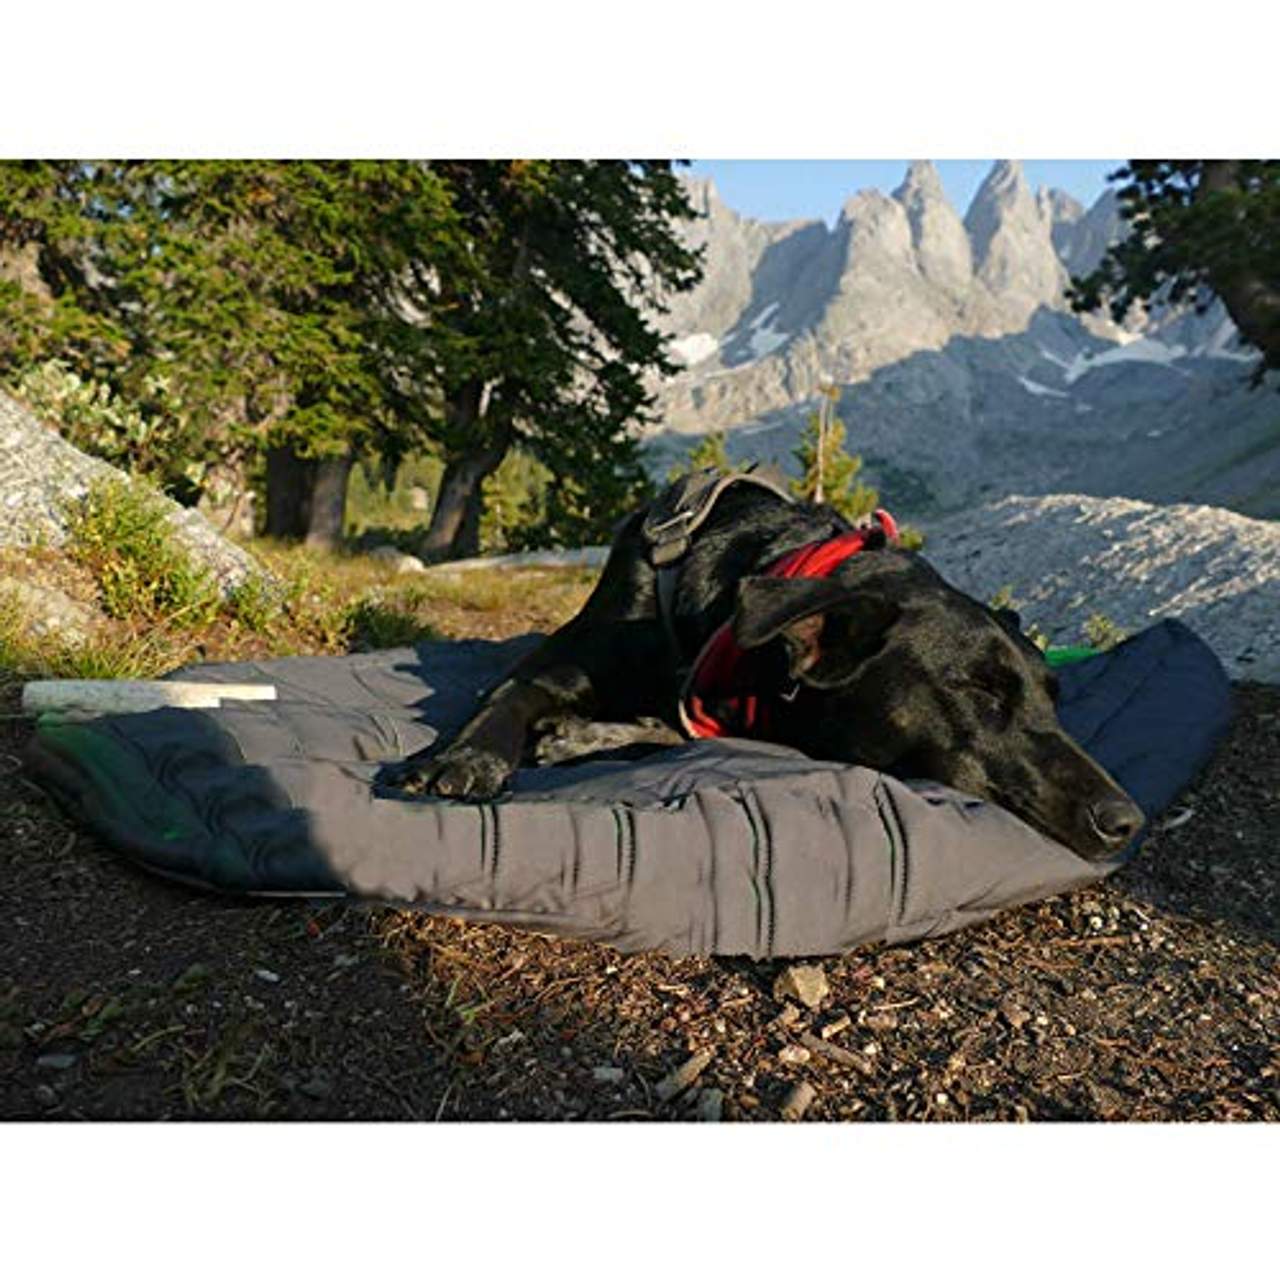 Comforter S die erste Mobile beheizbare Hundedecke per Powerbank